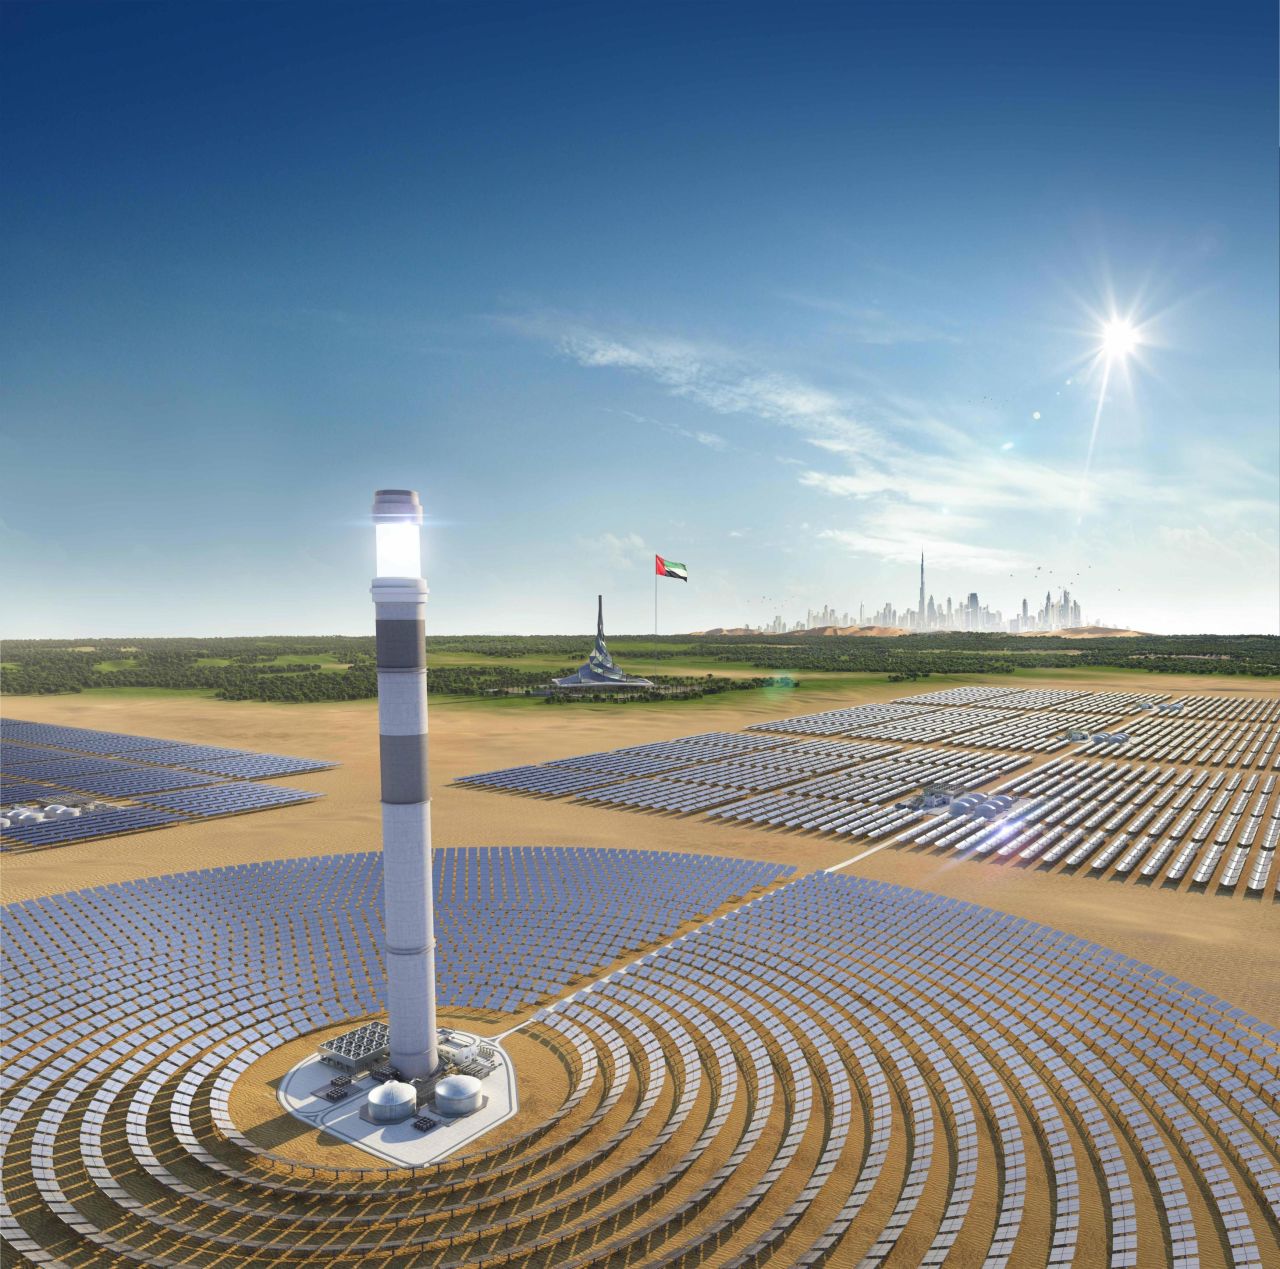 A digital rendering of the concentrated solar tower planned for the Mohammed Bin Rashid Al Maktoum Solar Park in Dubai.